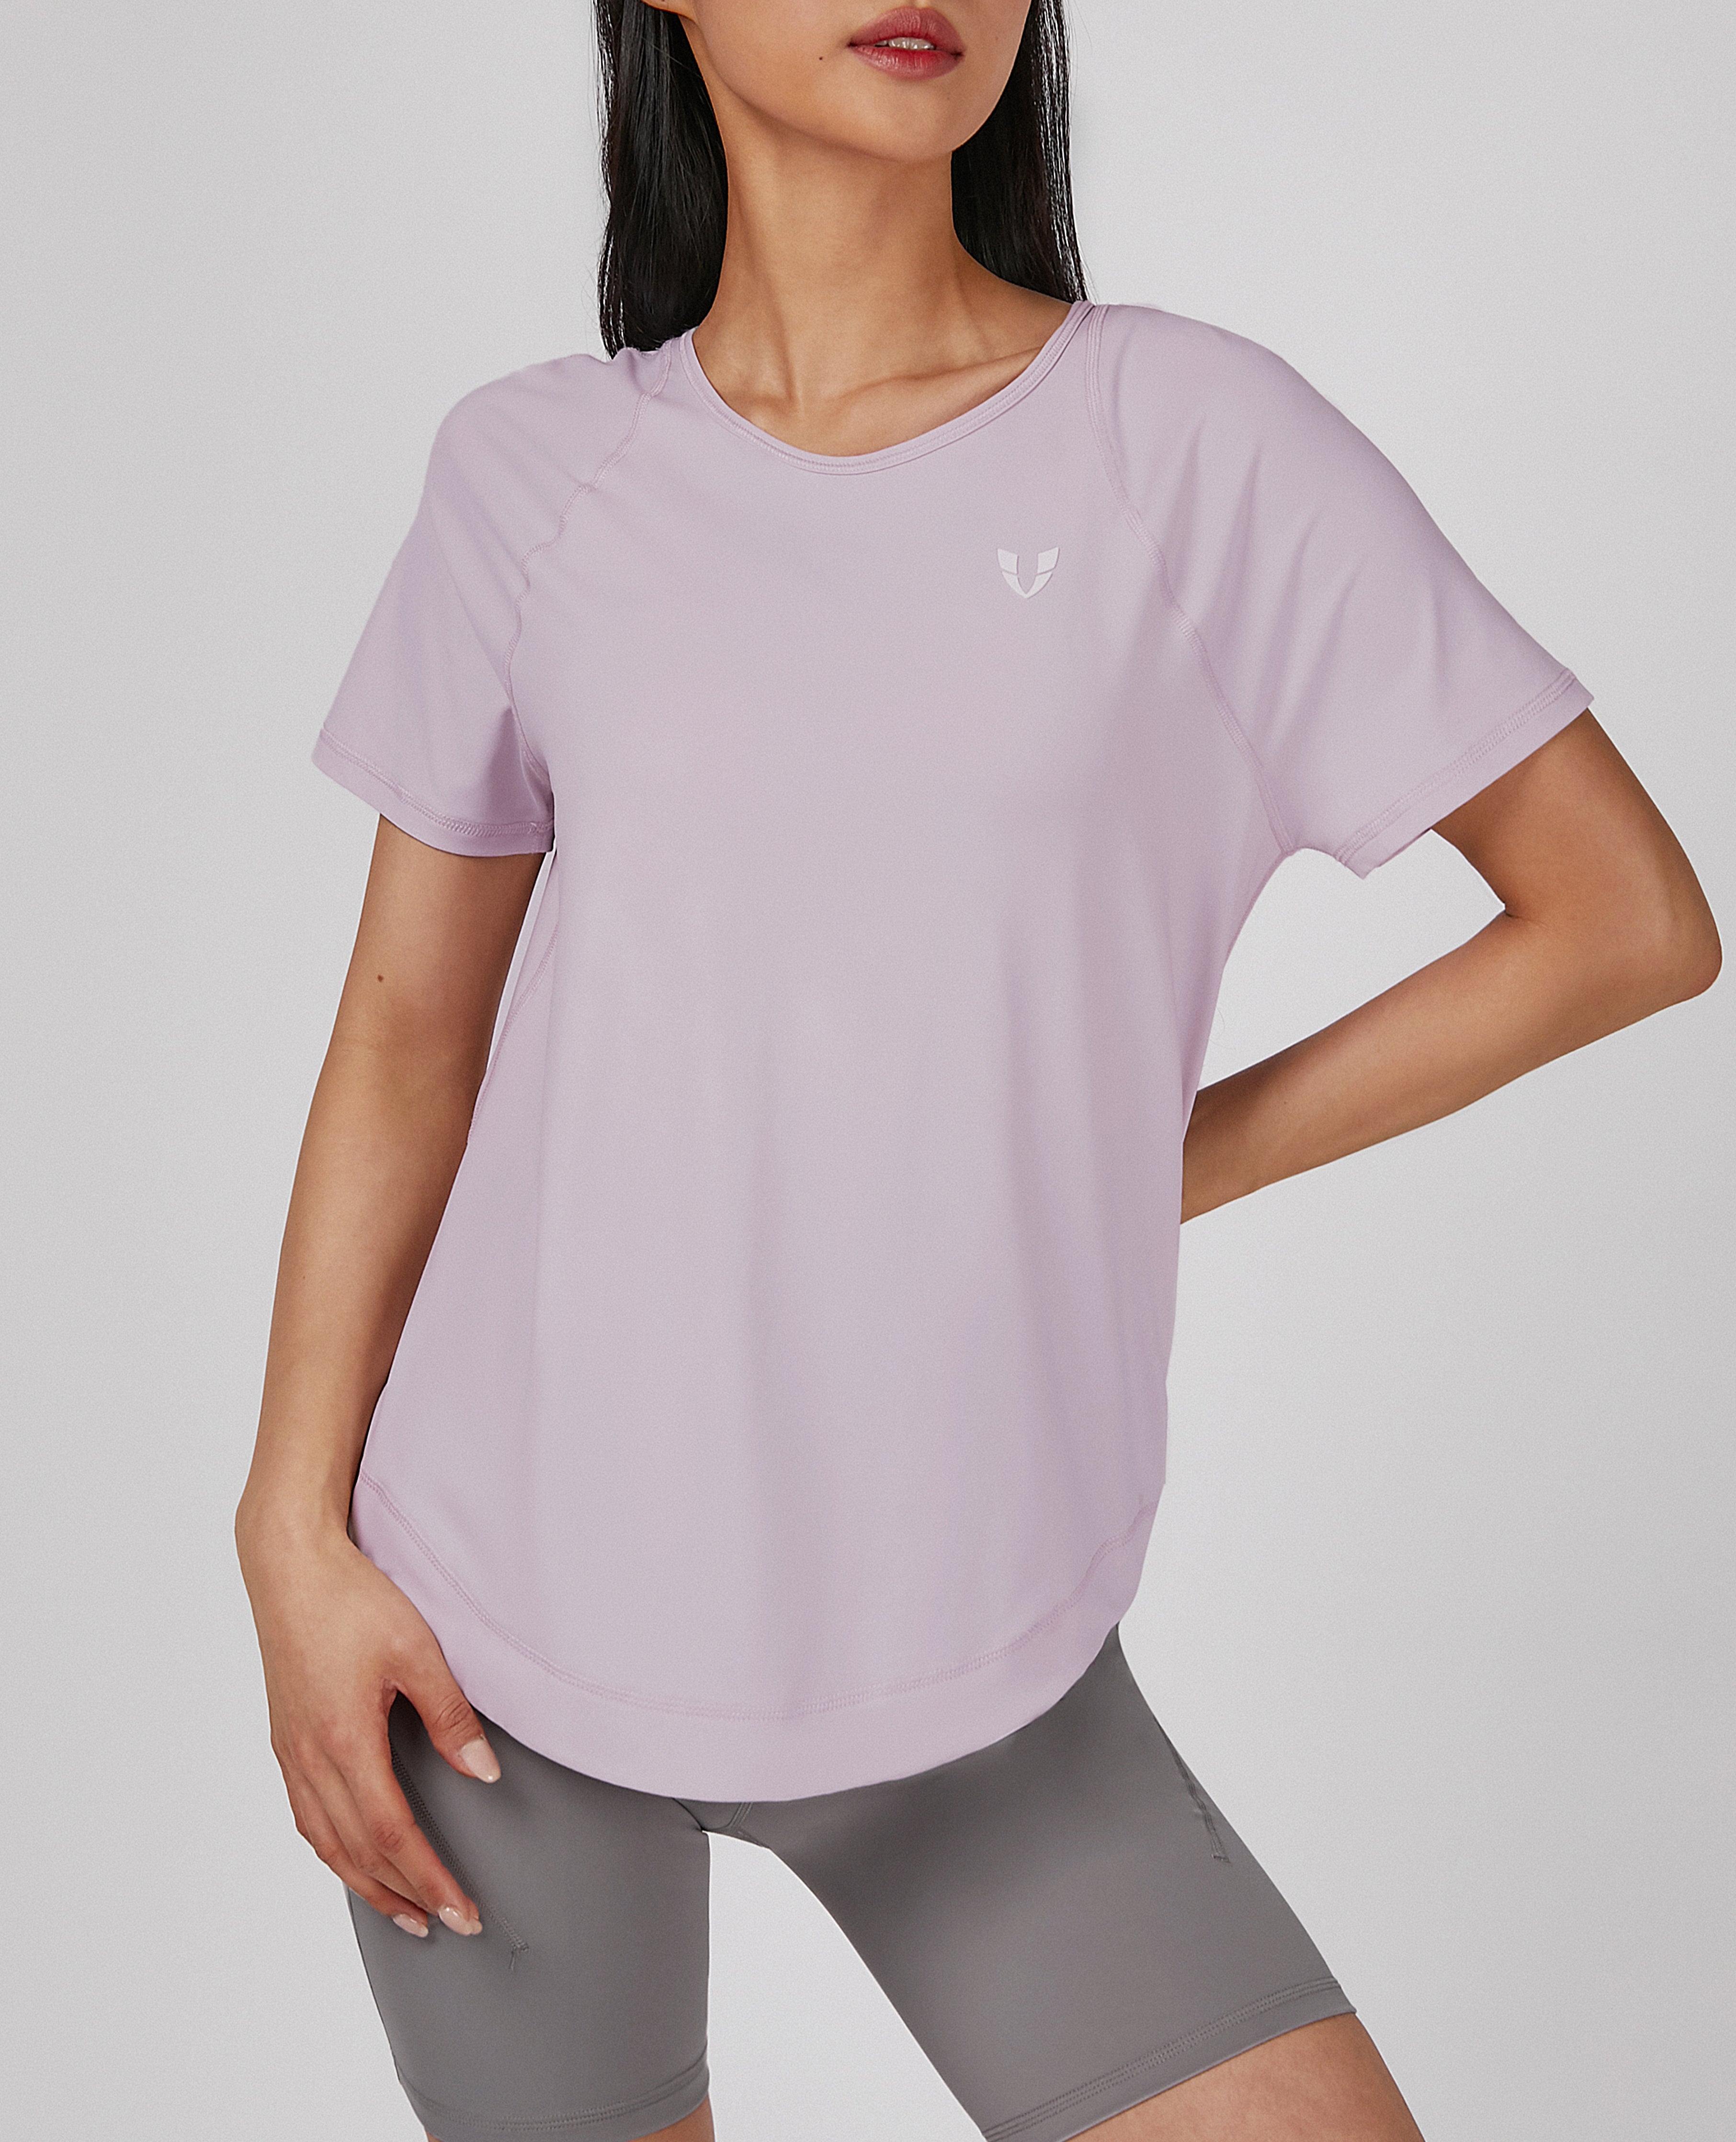 Camiseta de entrenamiento extragrande - Púrpura